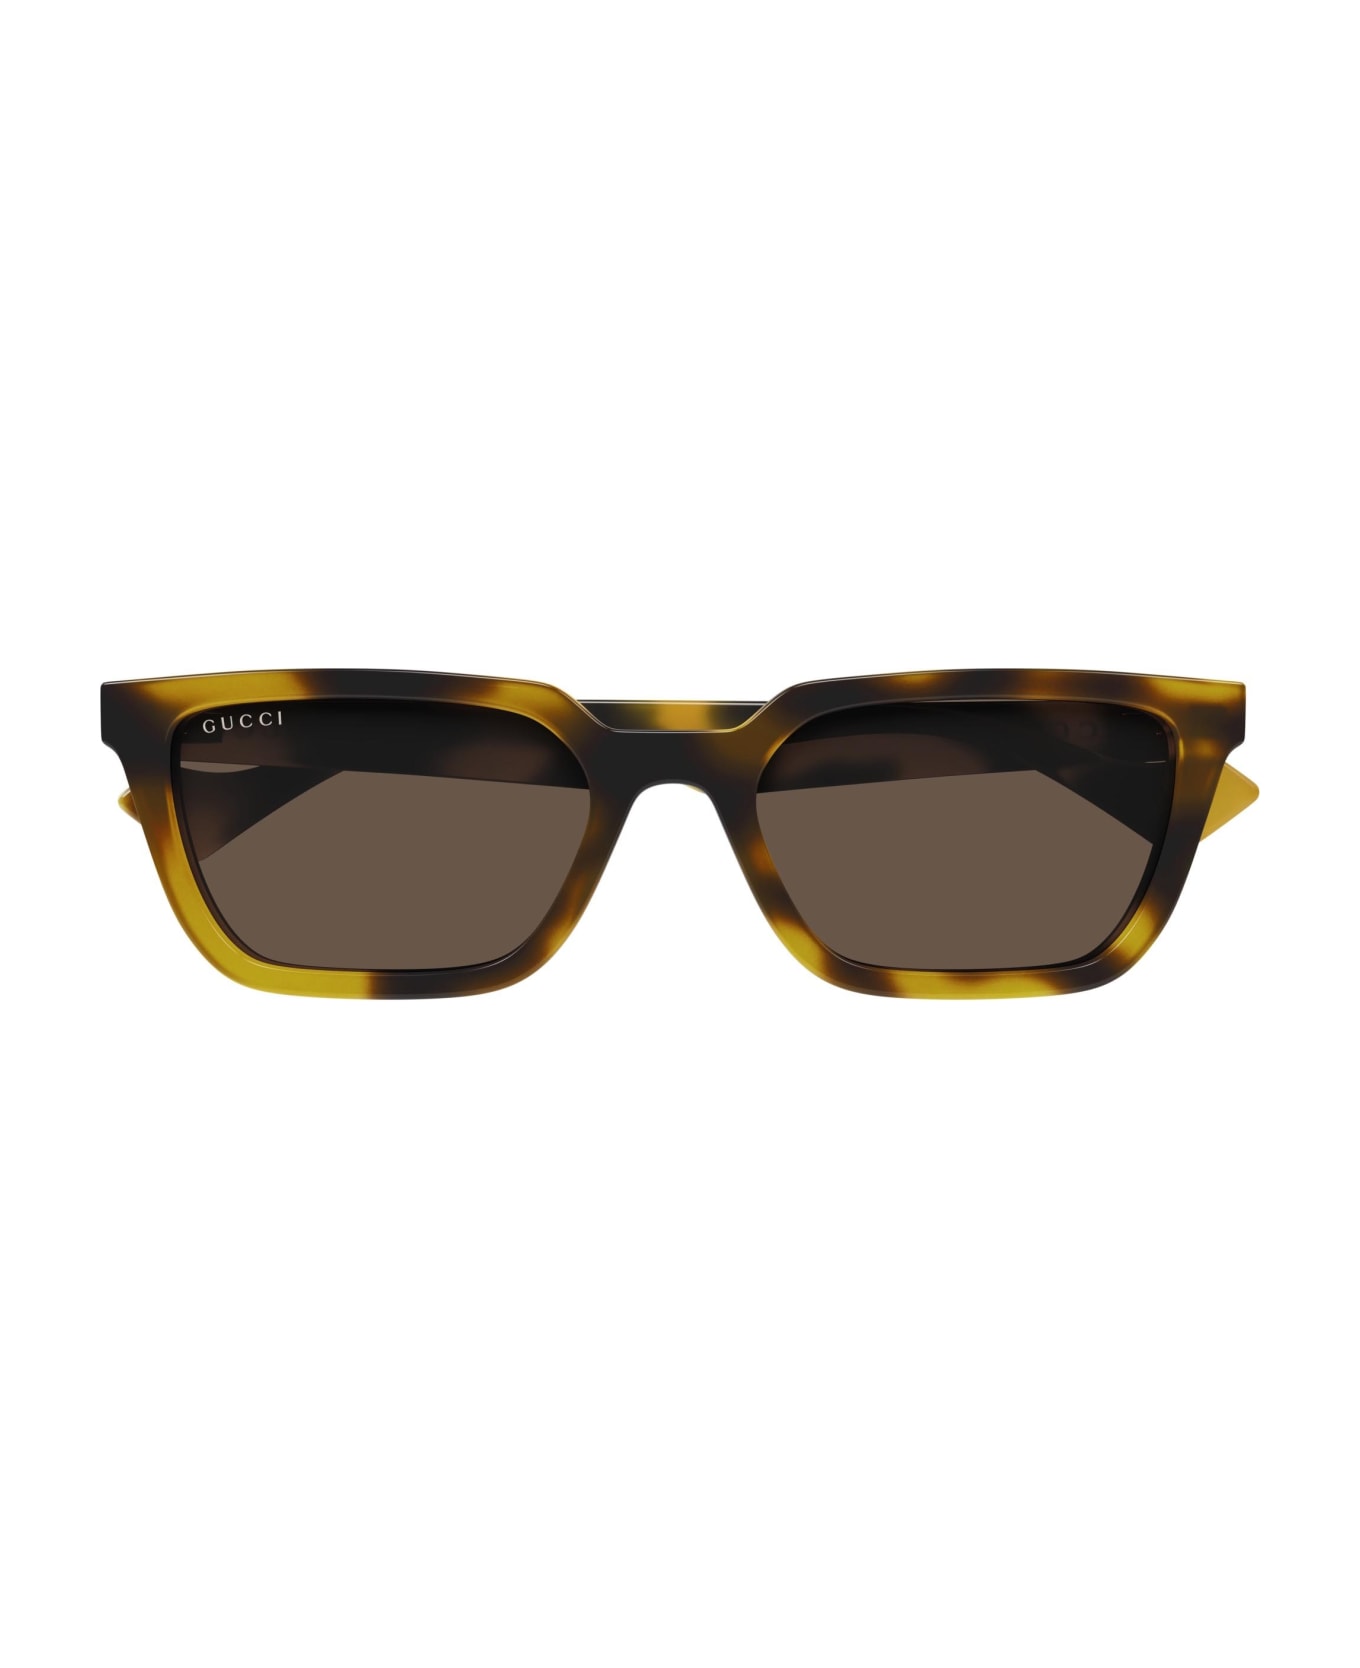 Gucci Eyewear Sunglasses - Havana/Marrone